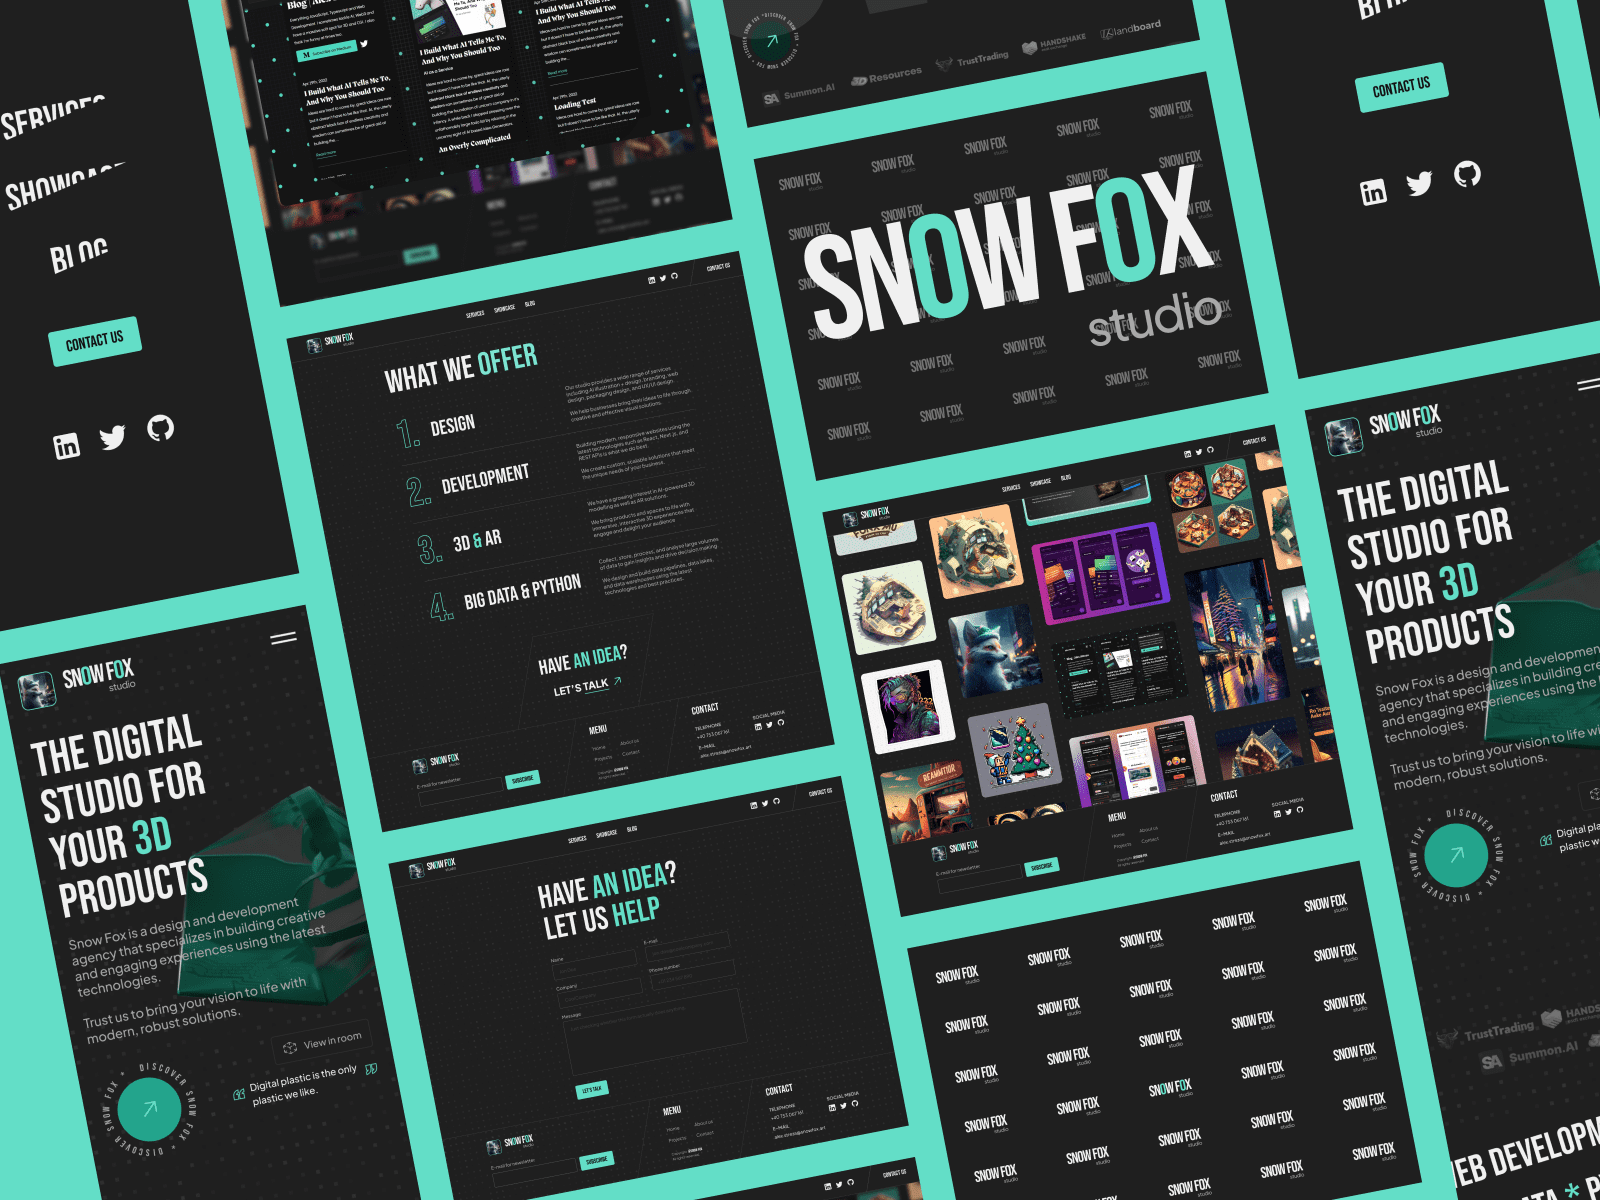 Snow Fox Studio